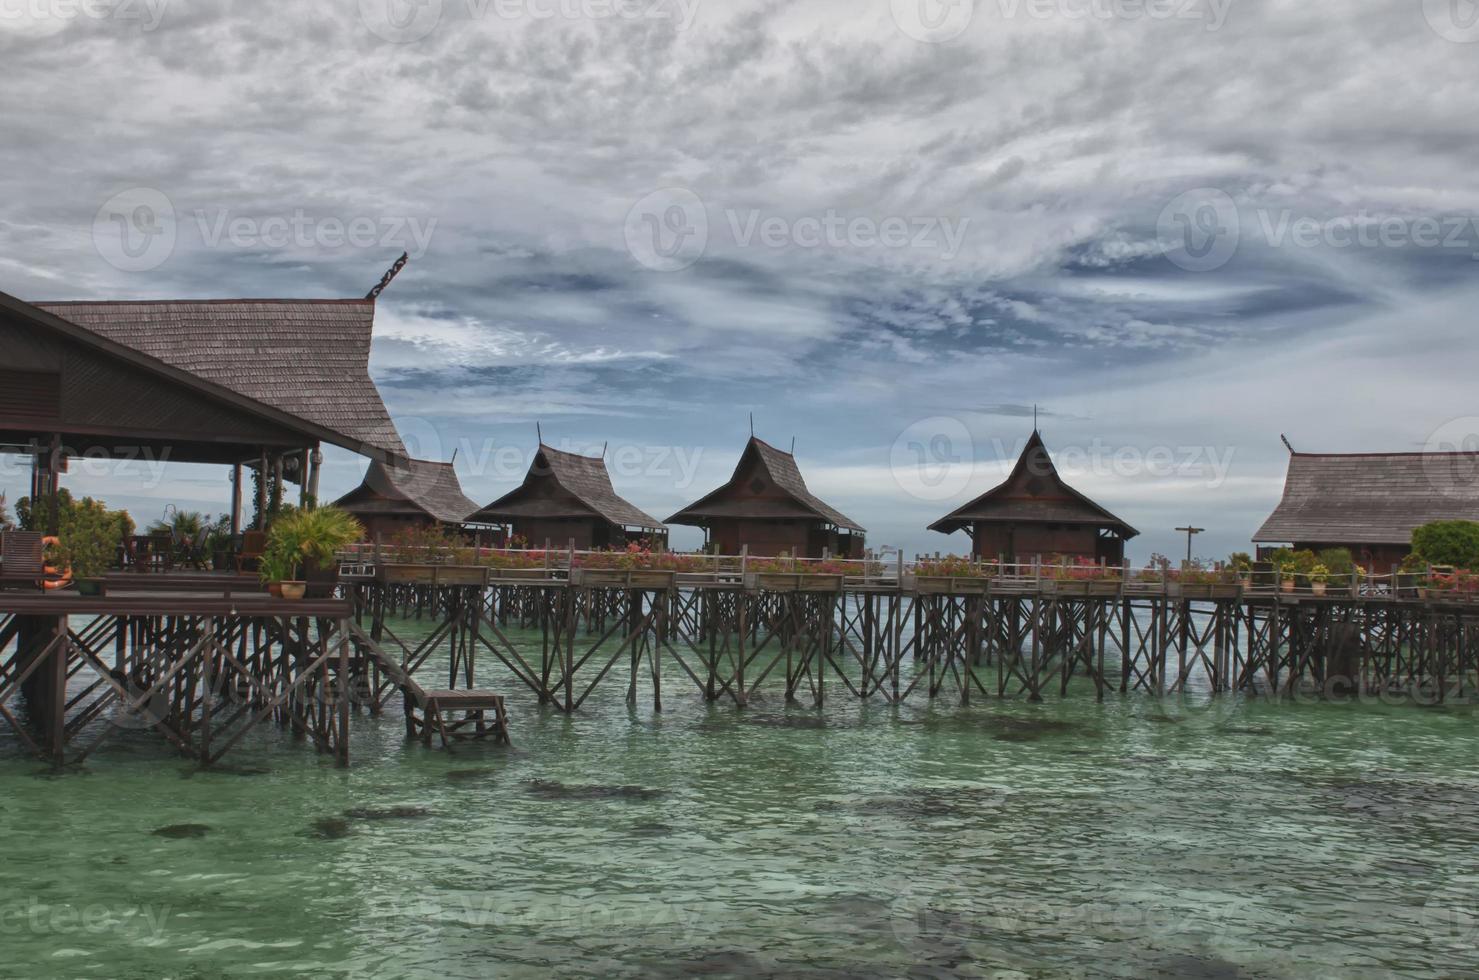 kapalai resort vue paradis tropical turquoise eau cristalline bornéo indonésie photo